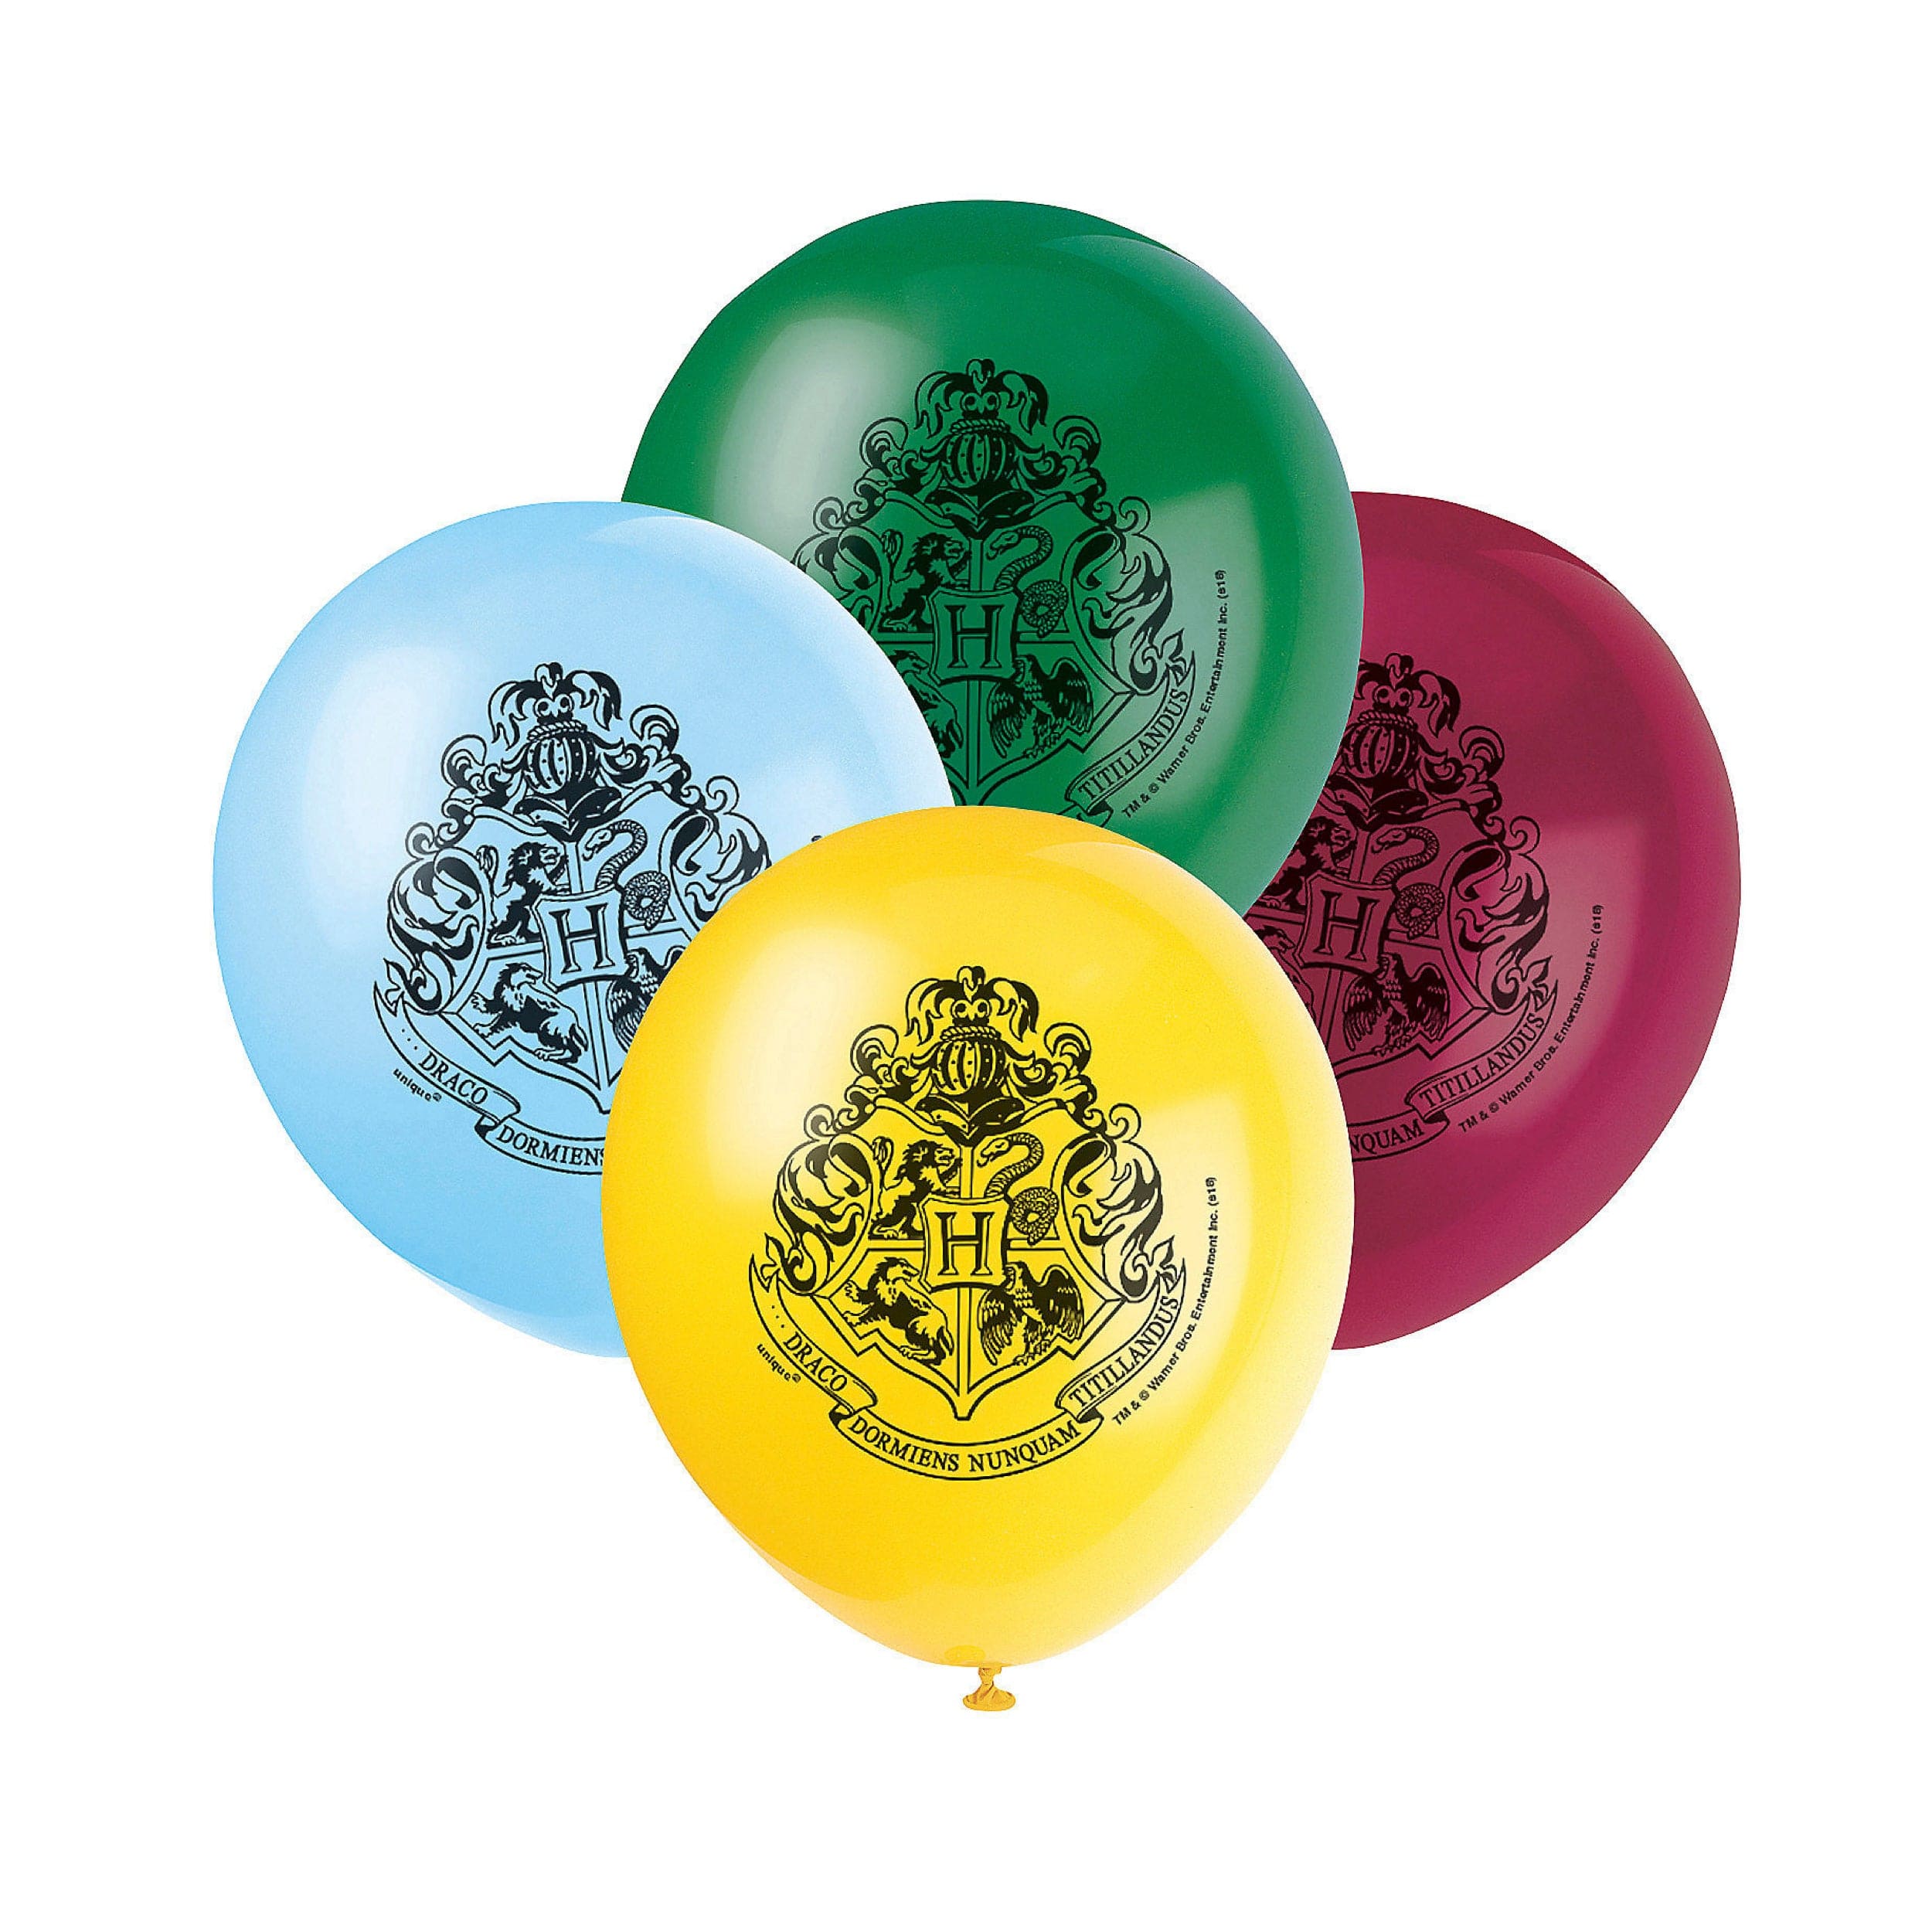 Ballons en latex sorcier Harry Potter - Label fête (22120)